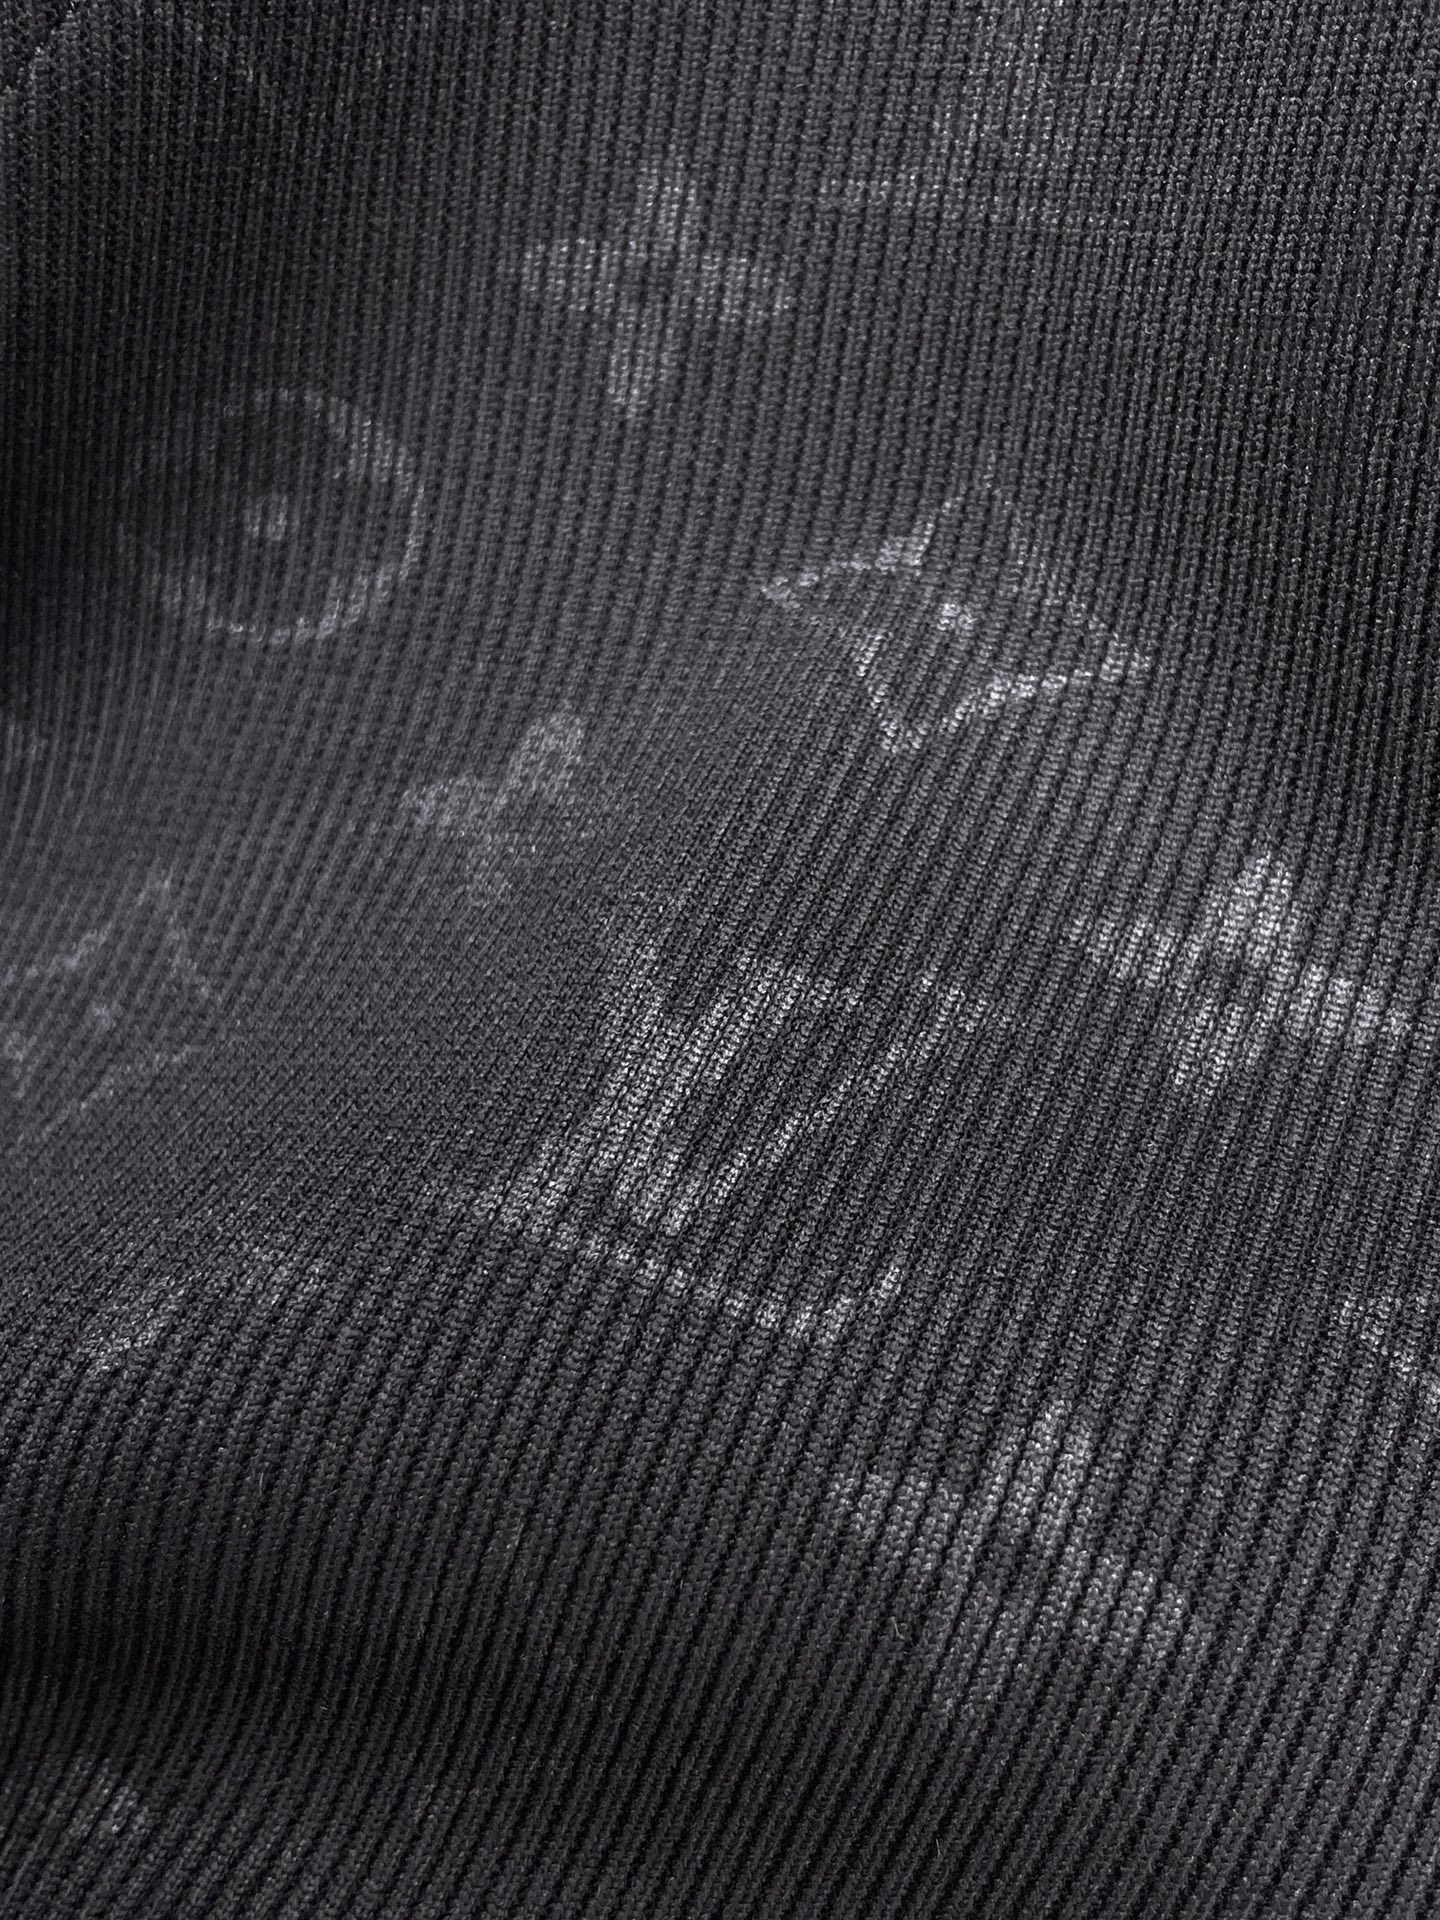 LV2024春季新款休闲裤！官网同步发售品牌经典LOGO休闲裤定制面料舒适度极好手触感强烈辨识度极高完美